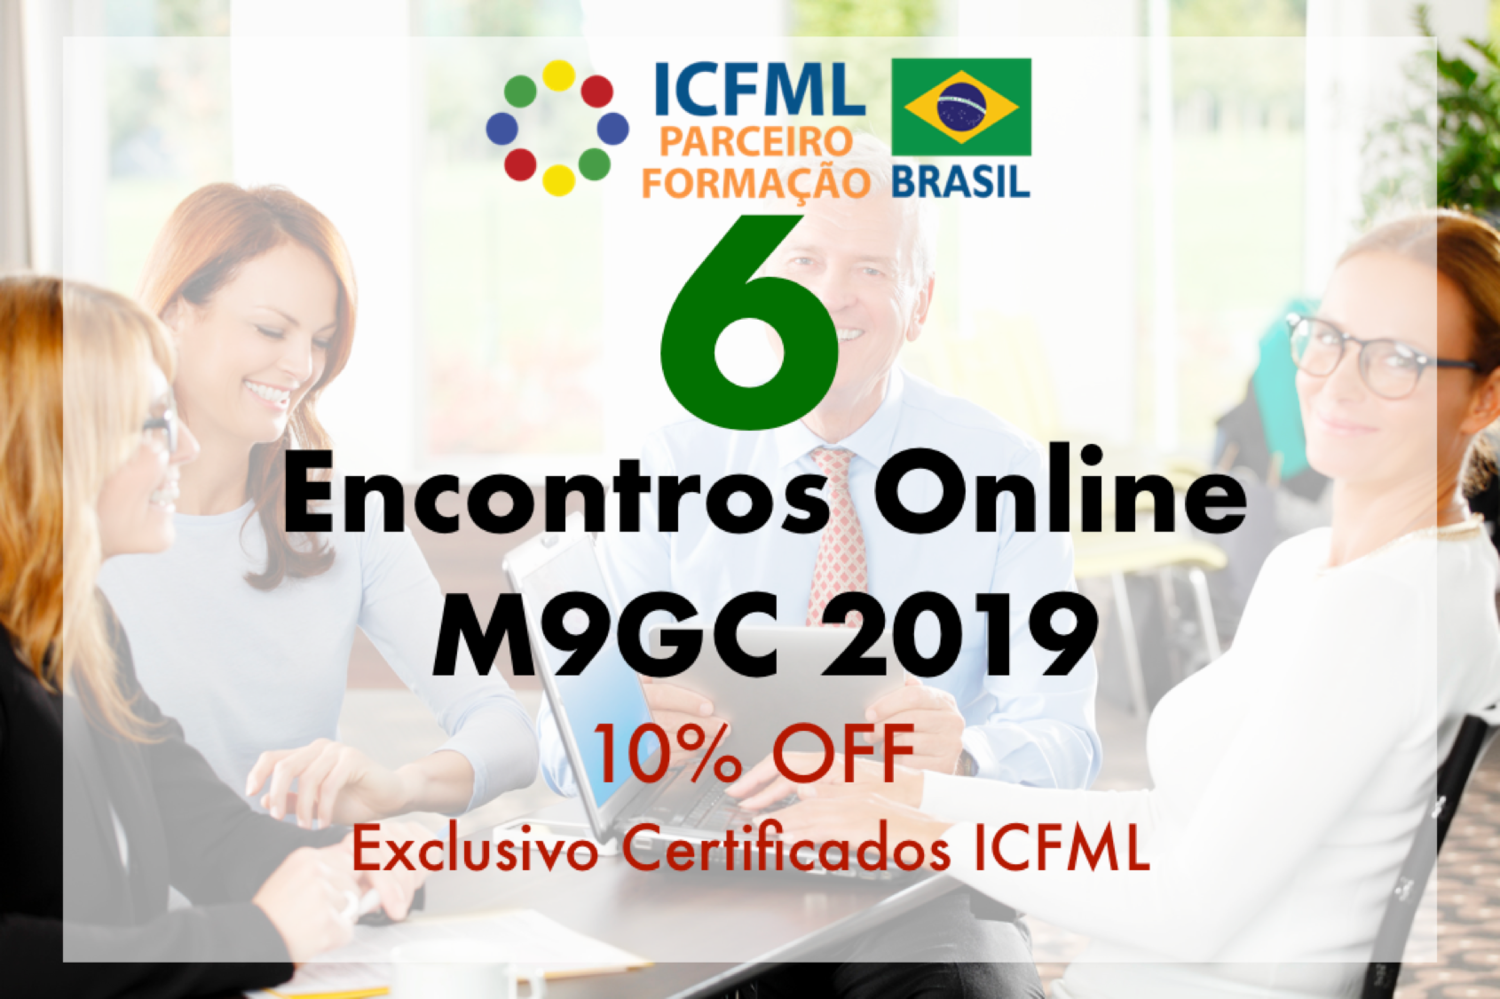 6  Encontros Online M9GC 2019 - Exclusivo para Certificados ICFML